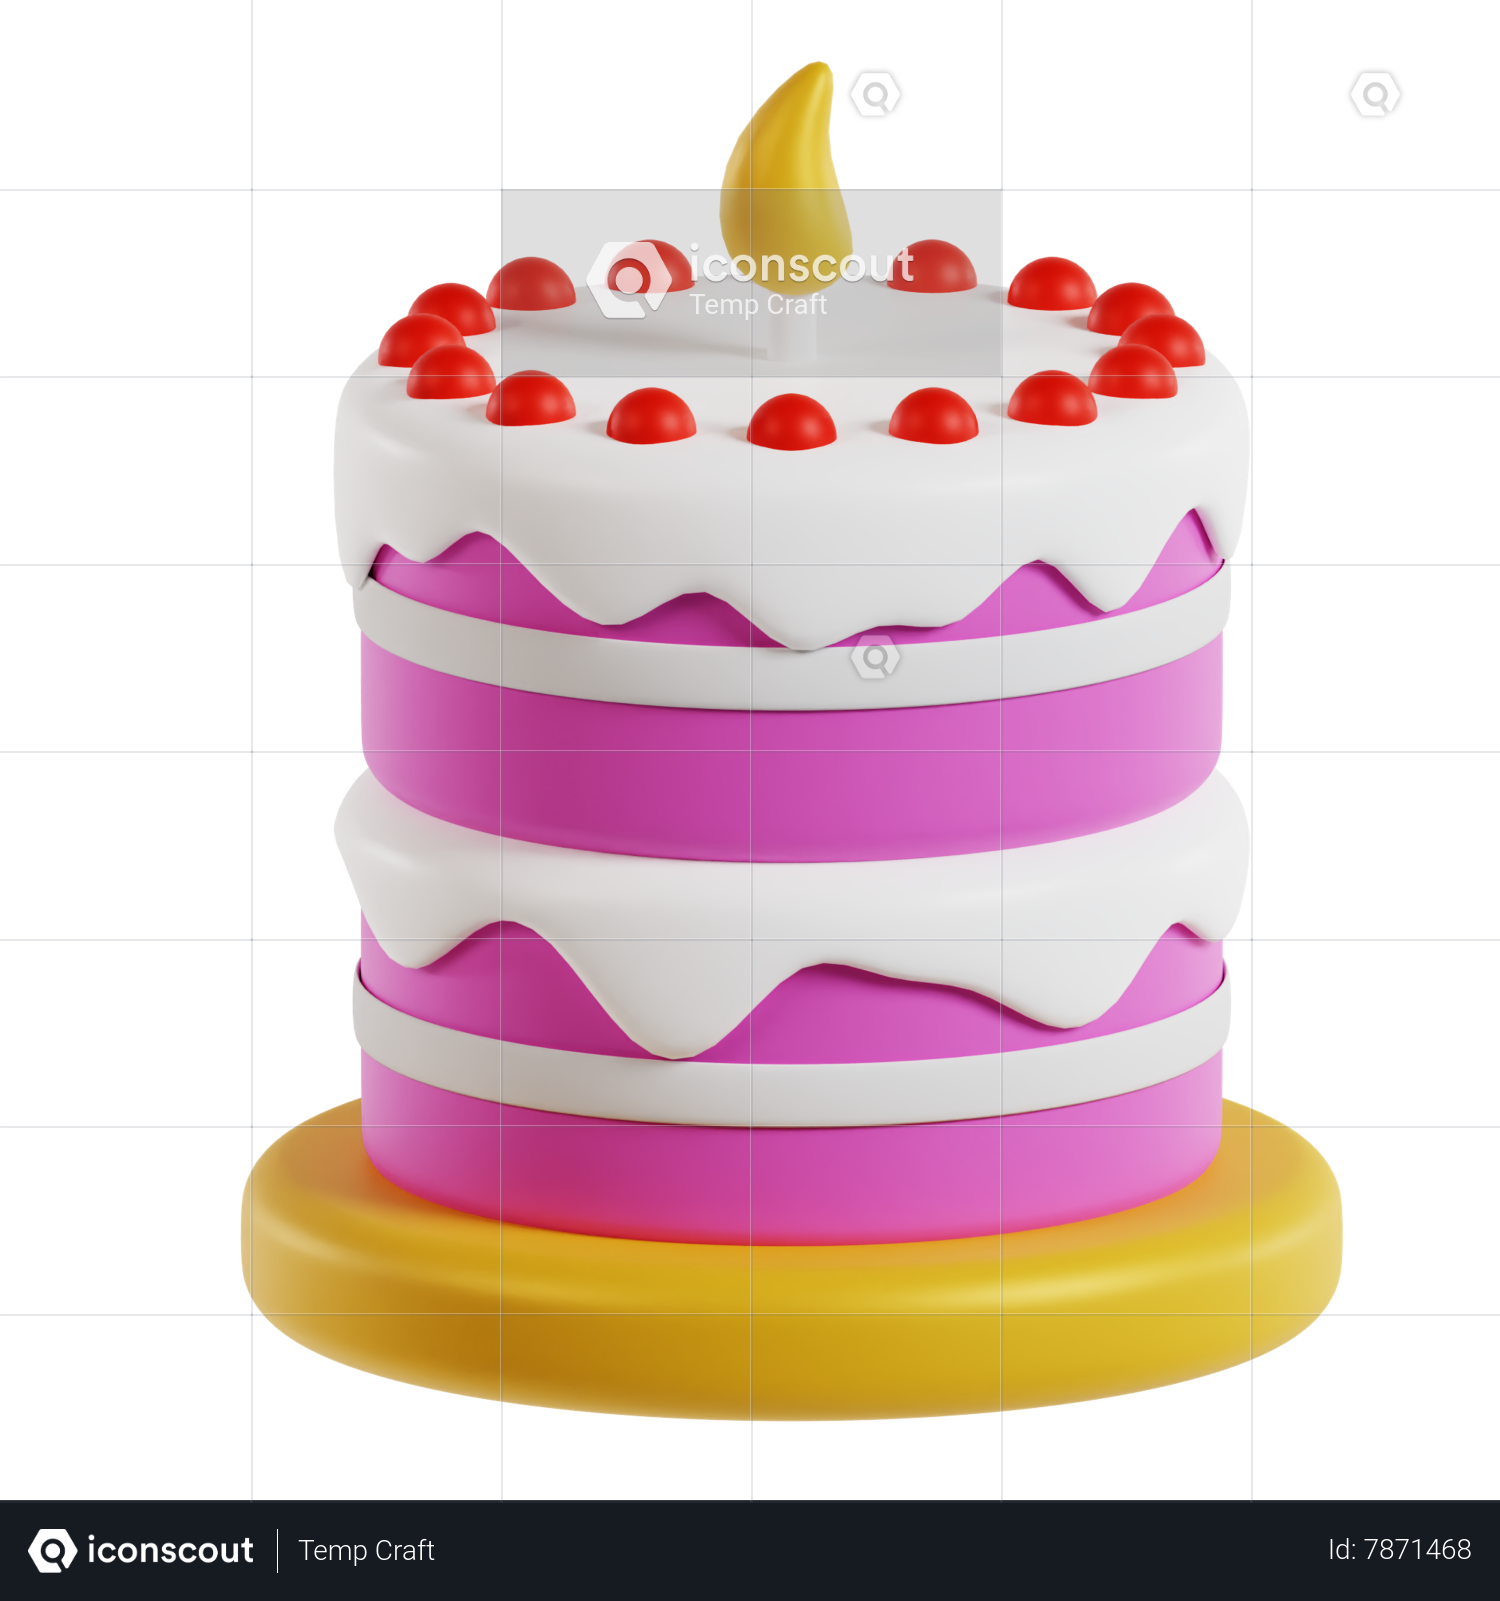 iPad, iPhone, Apps, App World Birthday / Bar Mitzvah Cake - CakesDecor